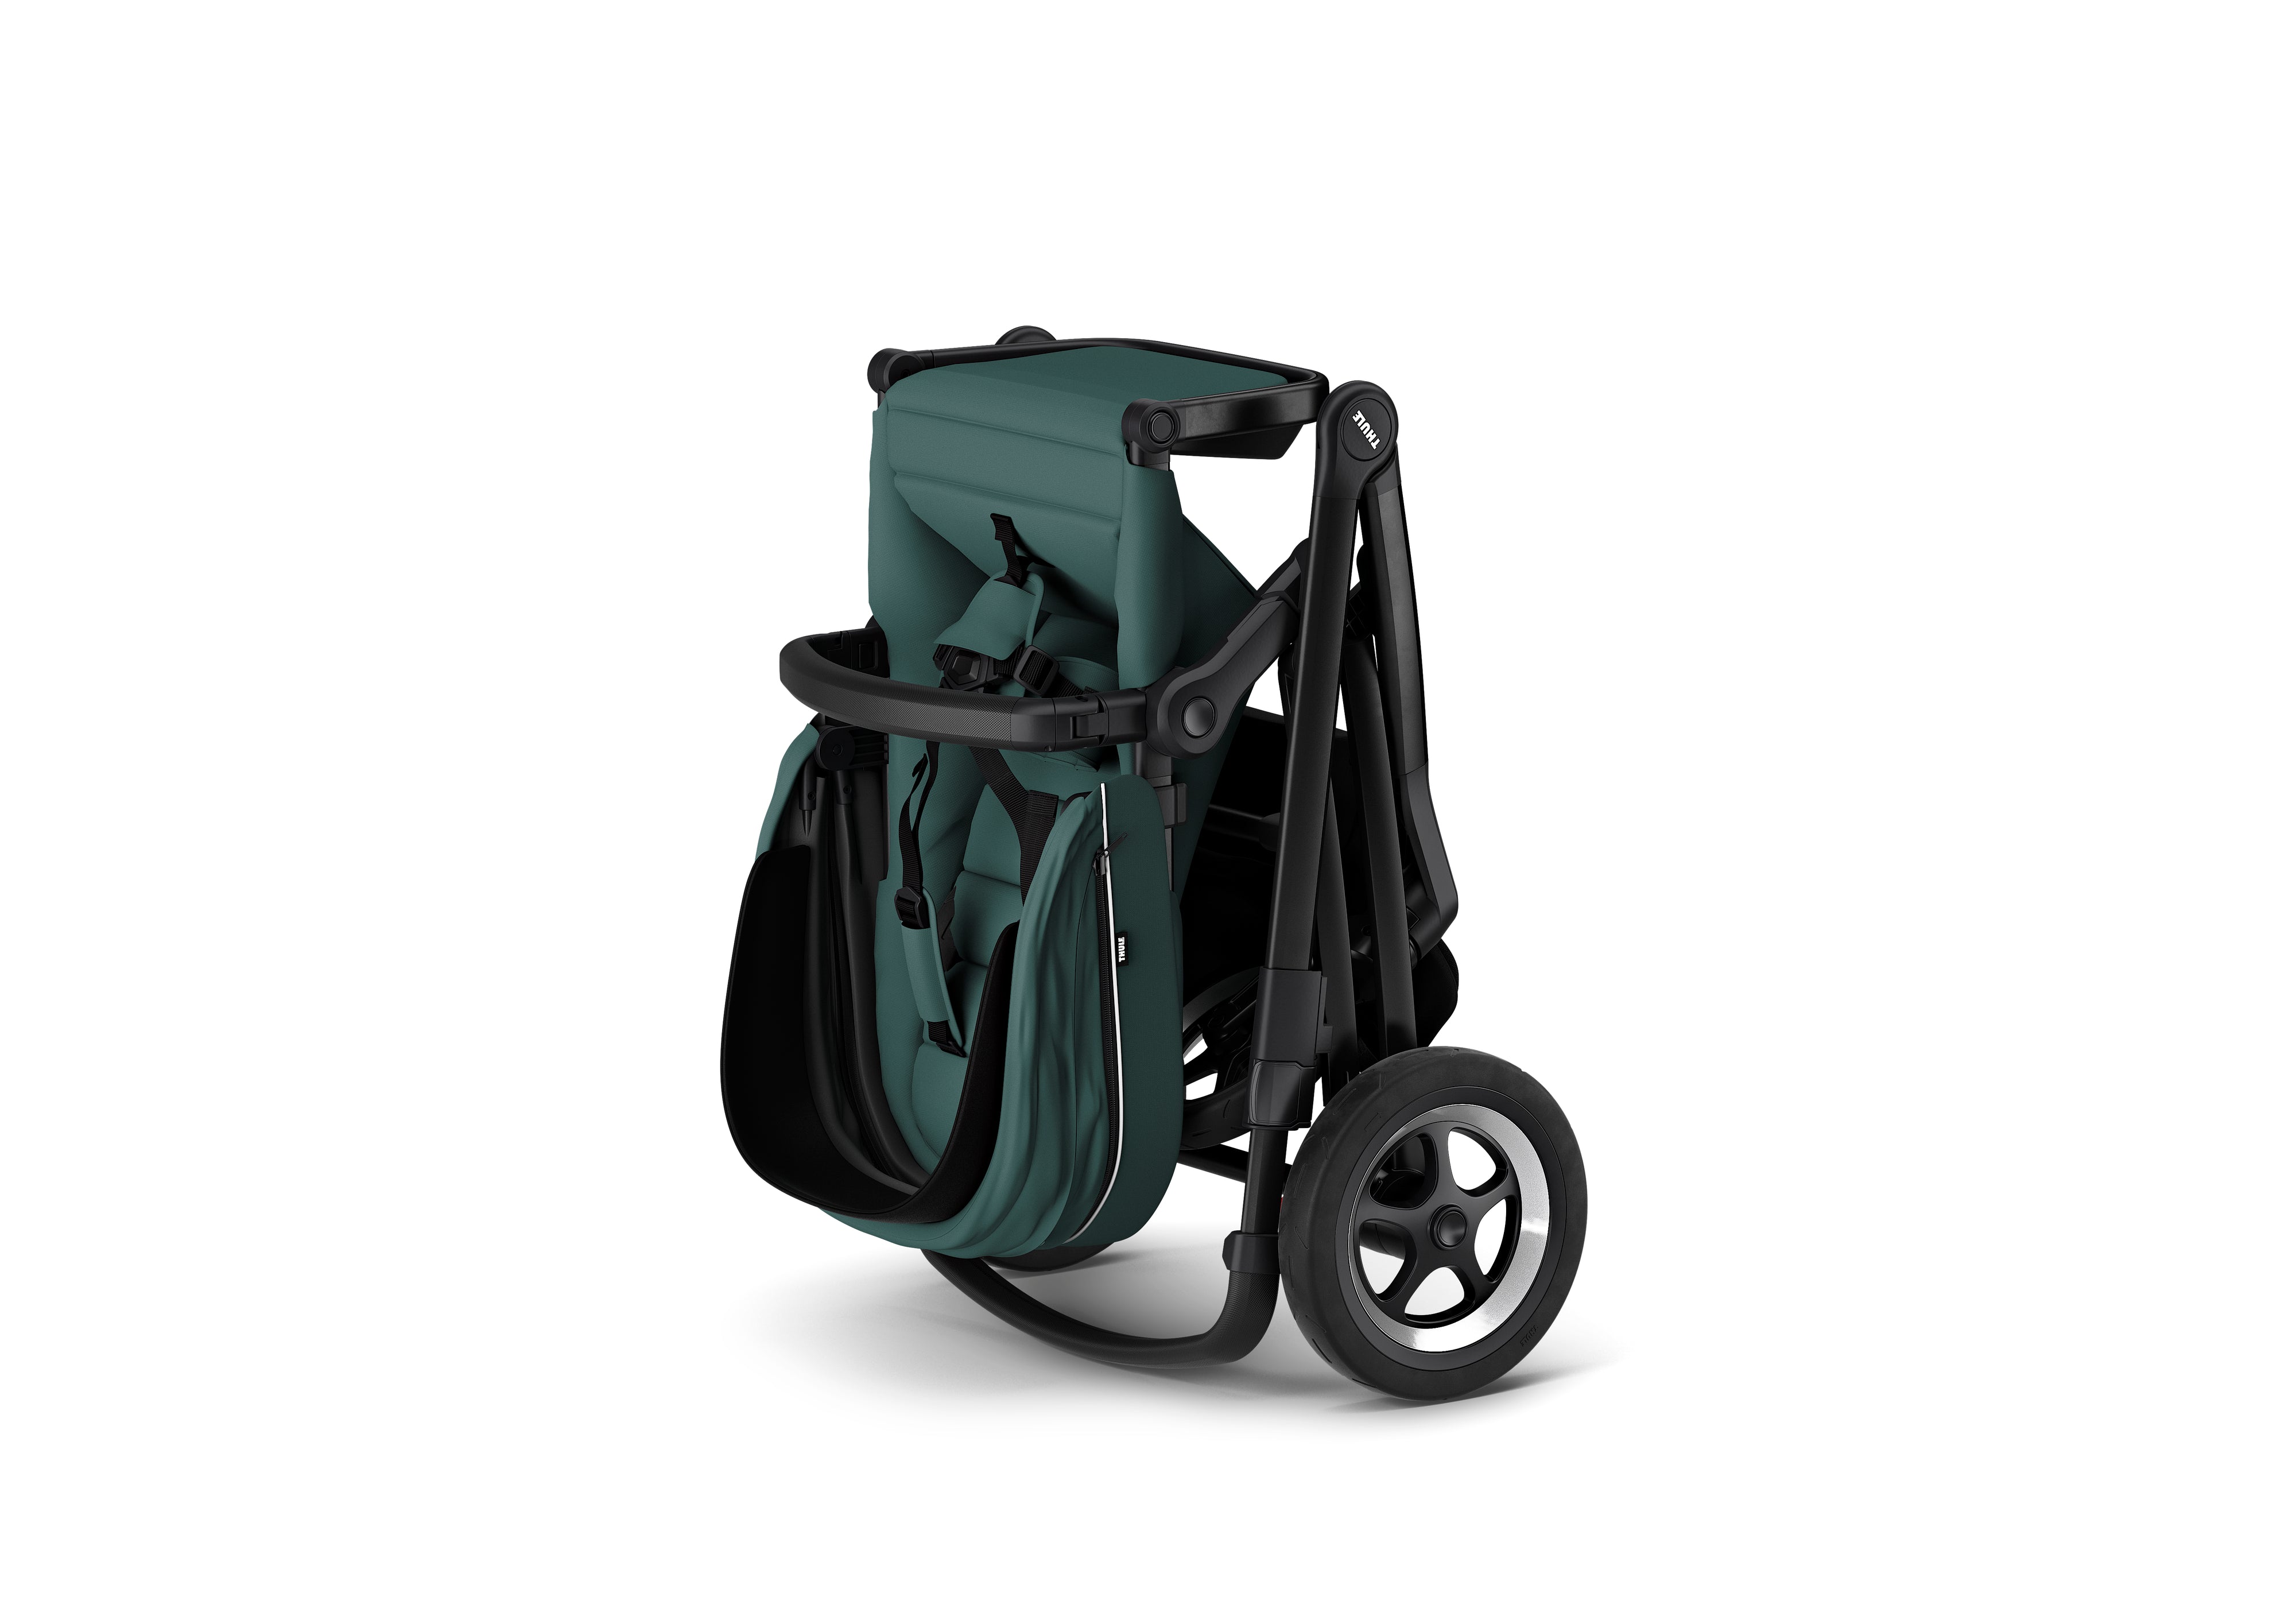 Thule Sleek: Convertible Single-to-Double Urban Stroller